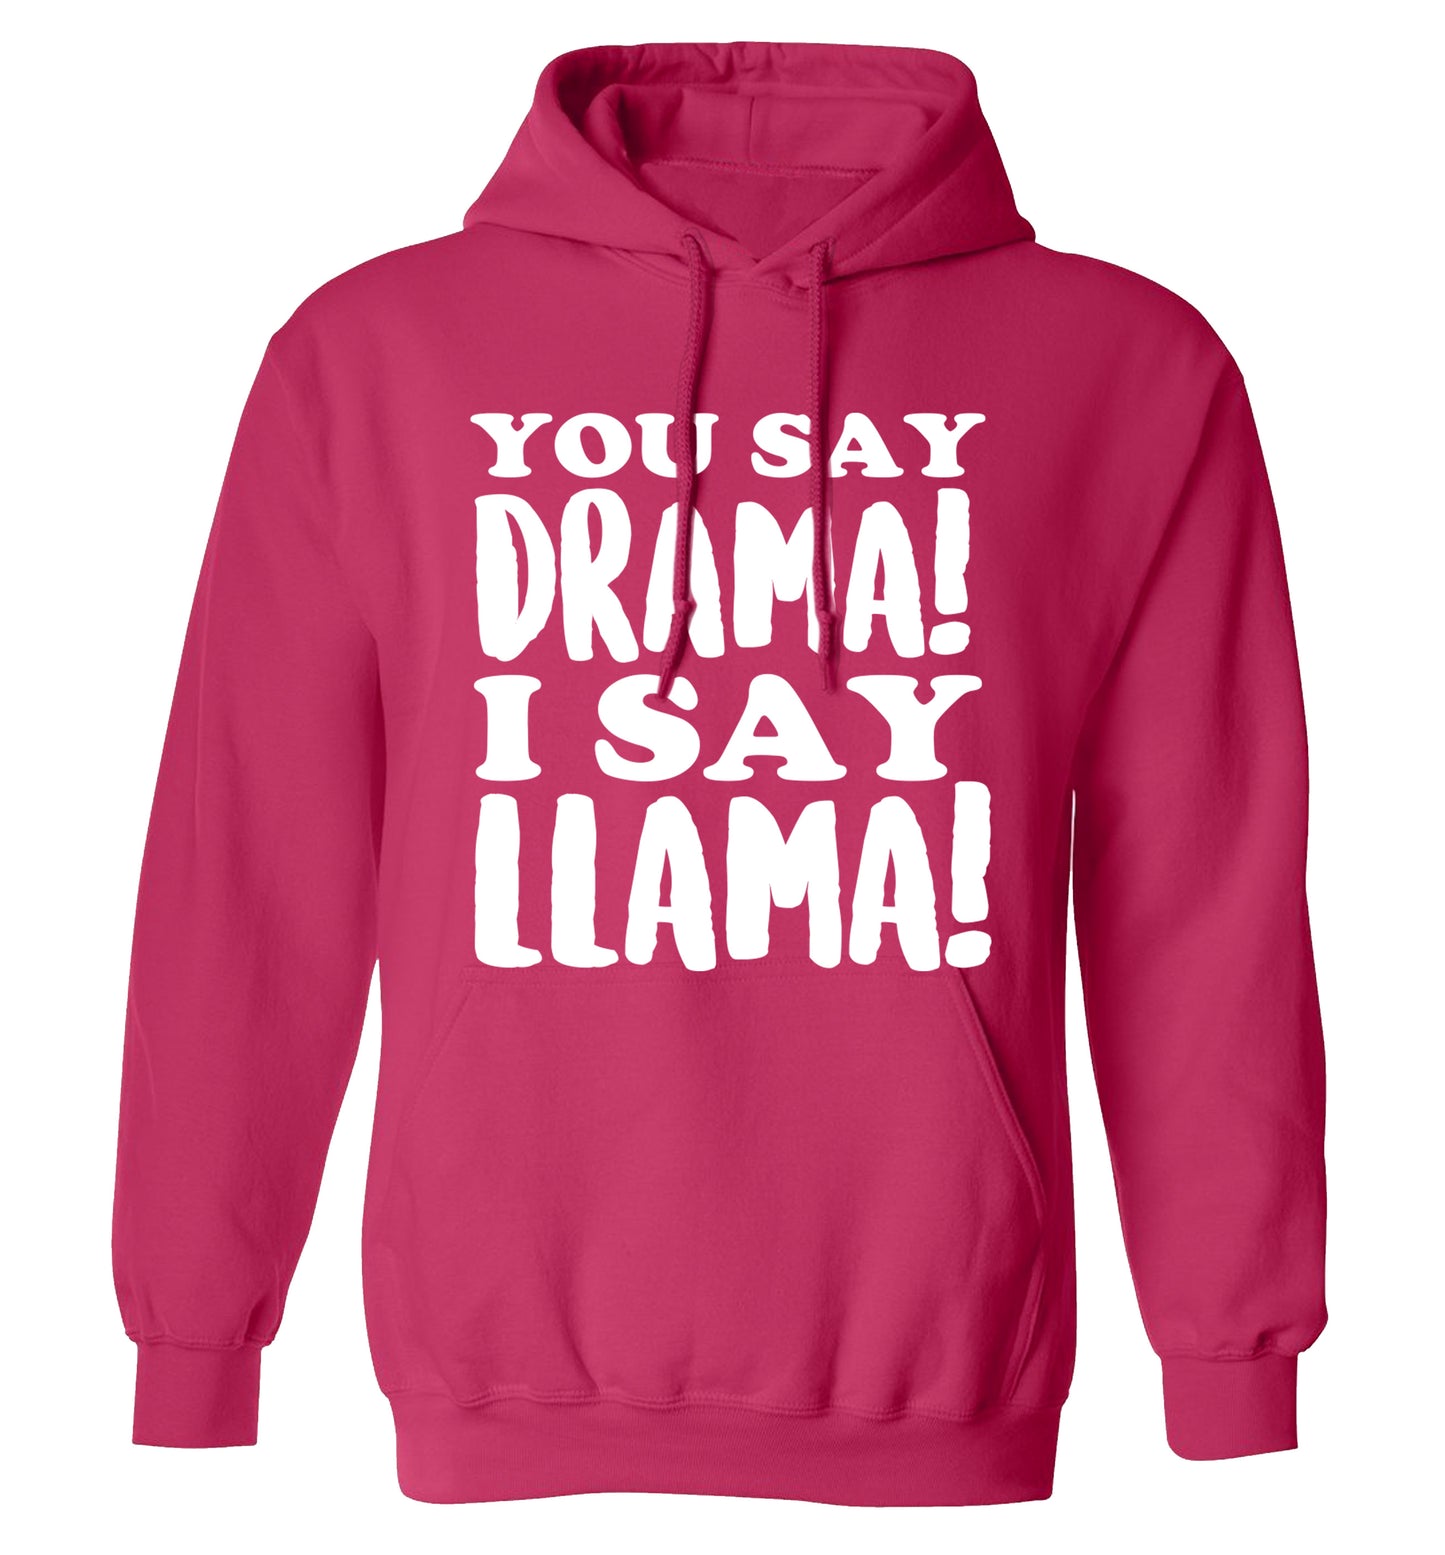 You say drama I say llama! adults unisex pink hoodie 2XL